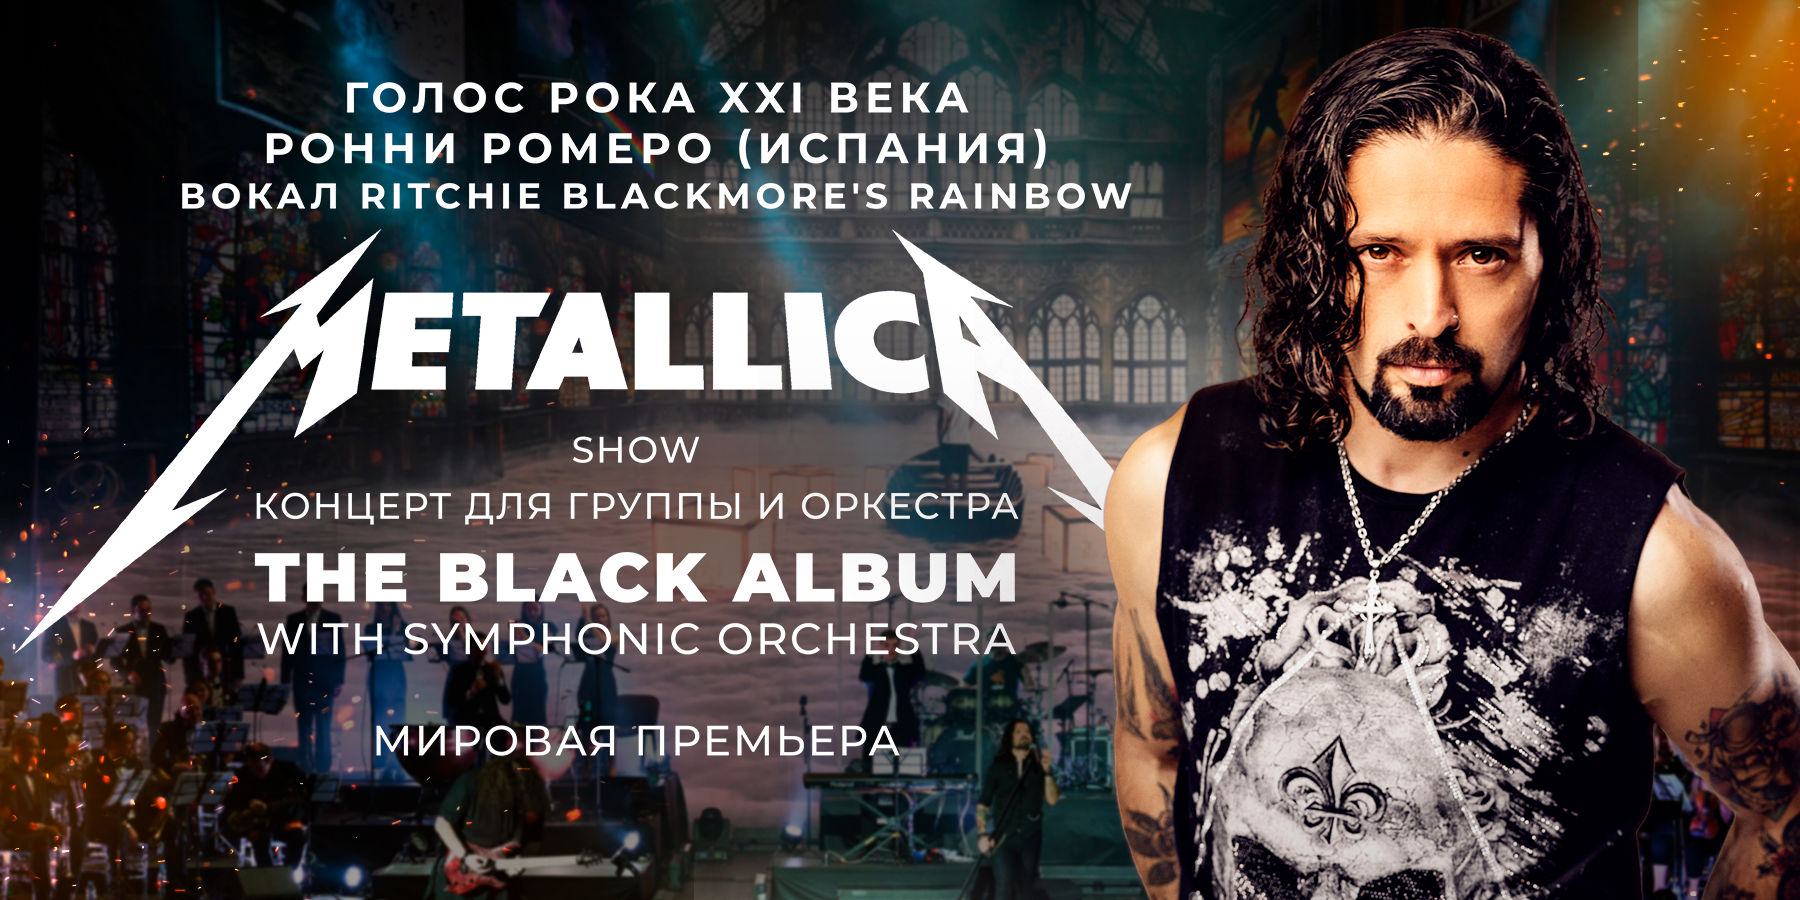 Ронни Ромеро(ИСПАНИЯ) Metallica : The BLACK ALBUM с симфоническим оркестром